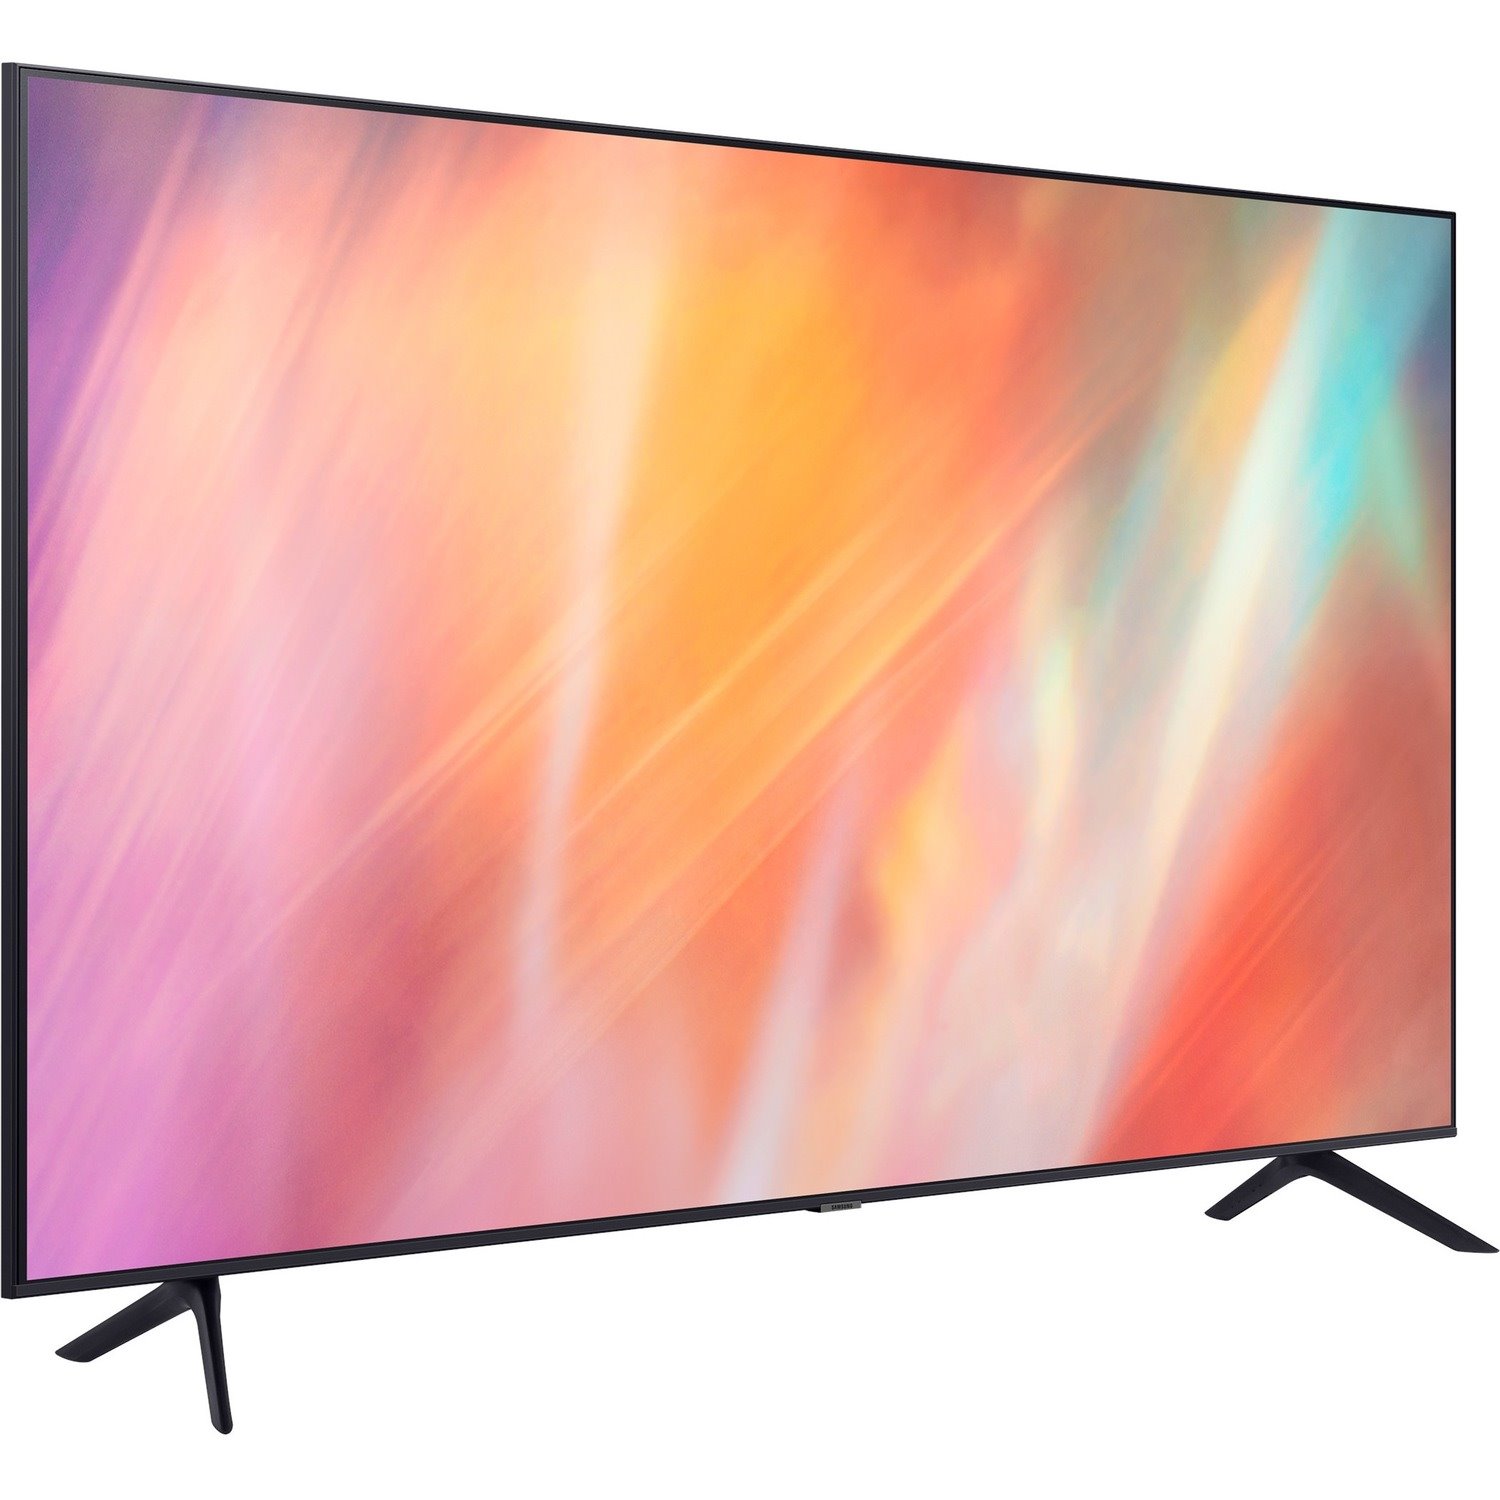 Samsung LH55BEAHLGW 139.7 cm Smart LED-LCD TV - 4K UHDTV - Titan Gray